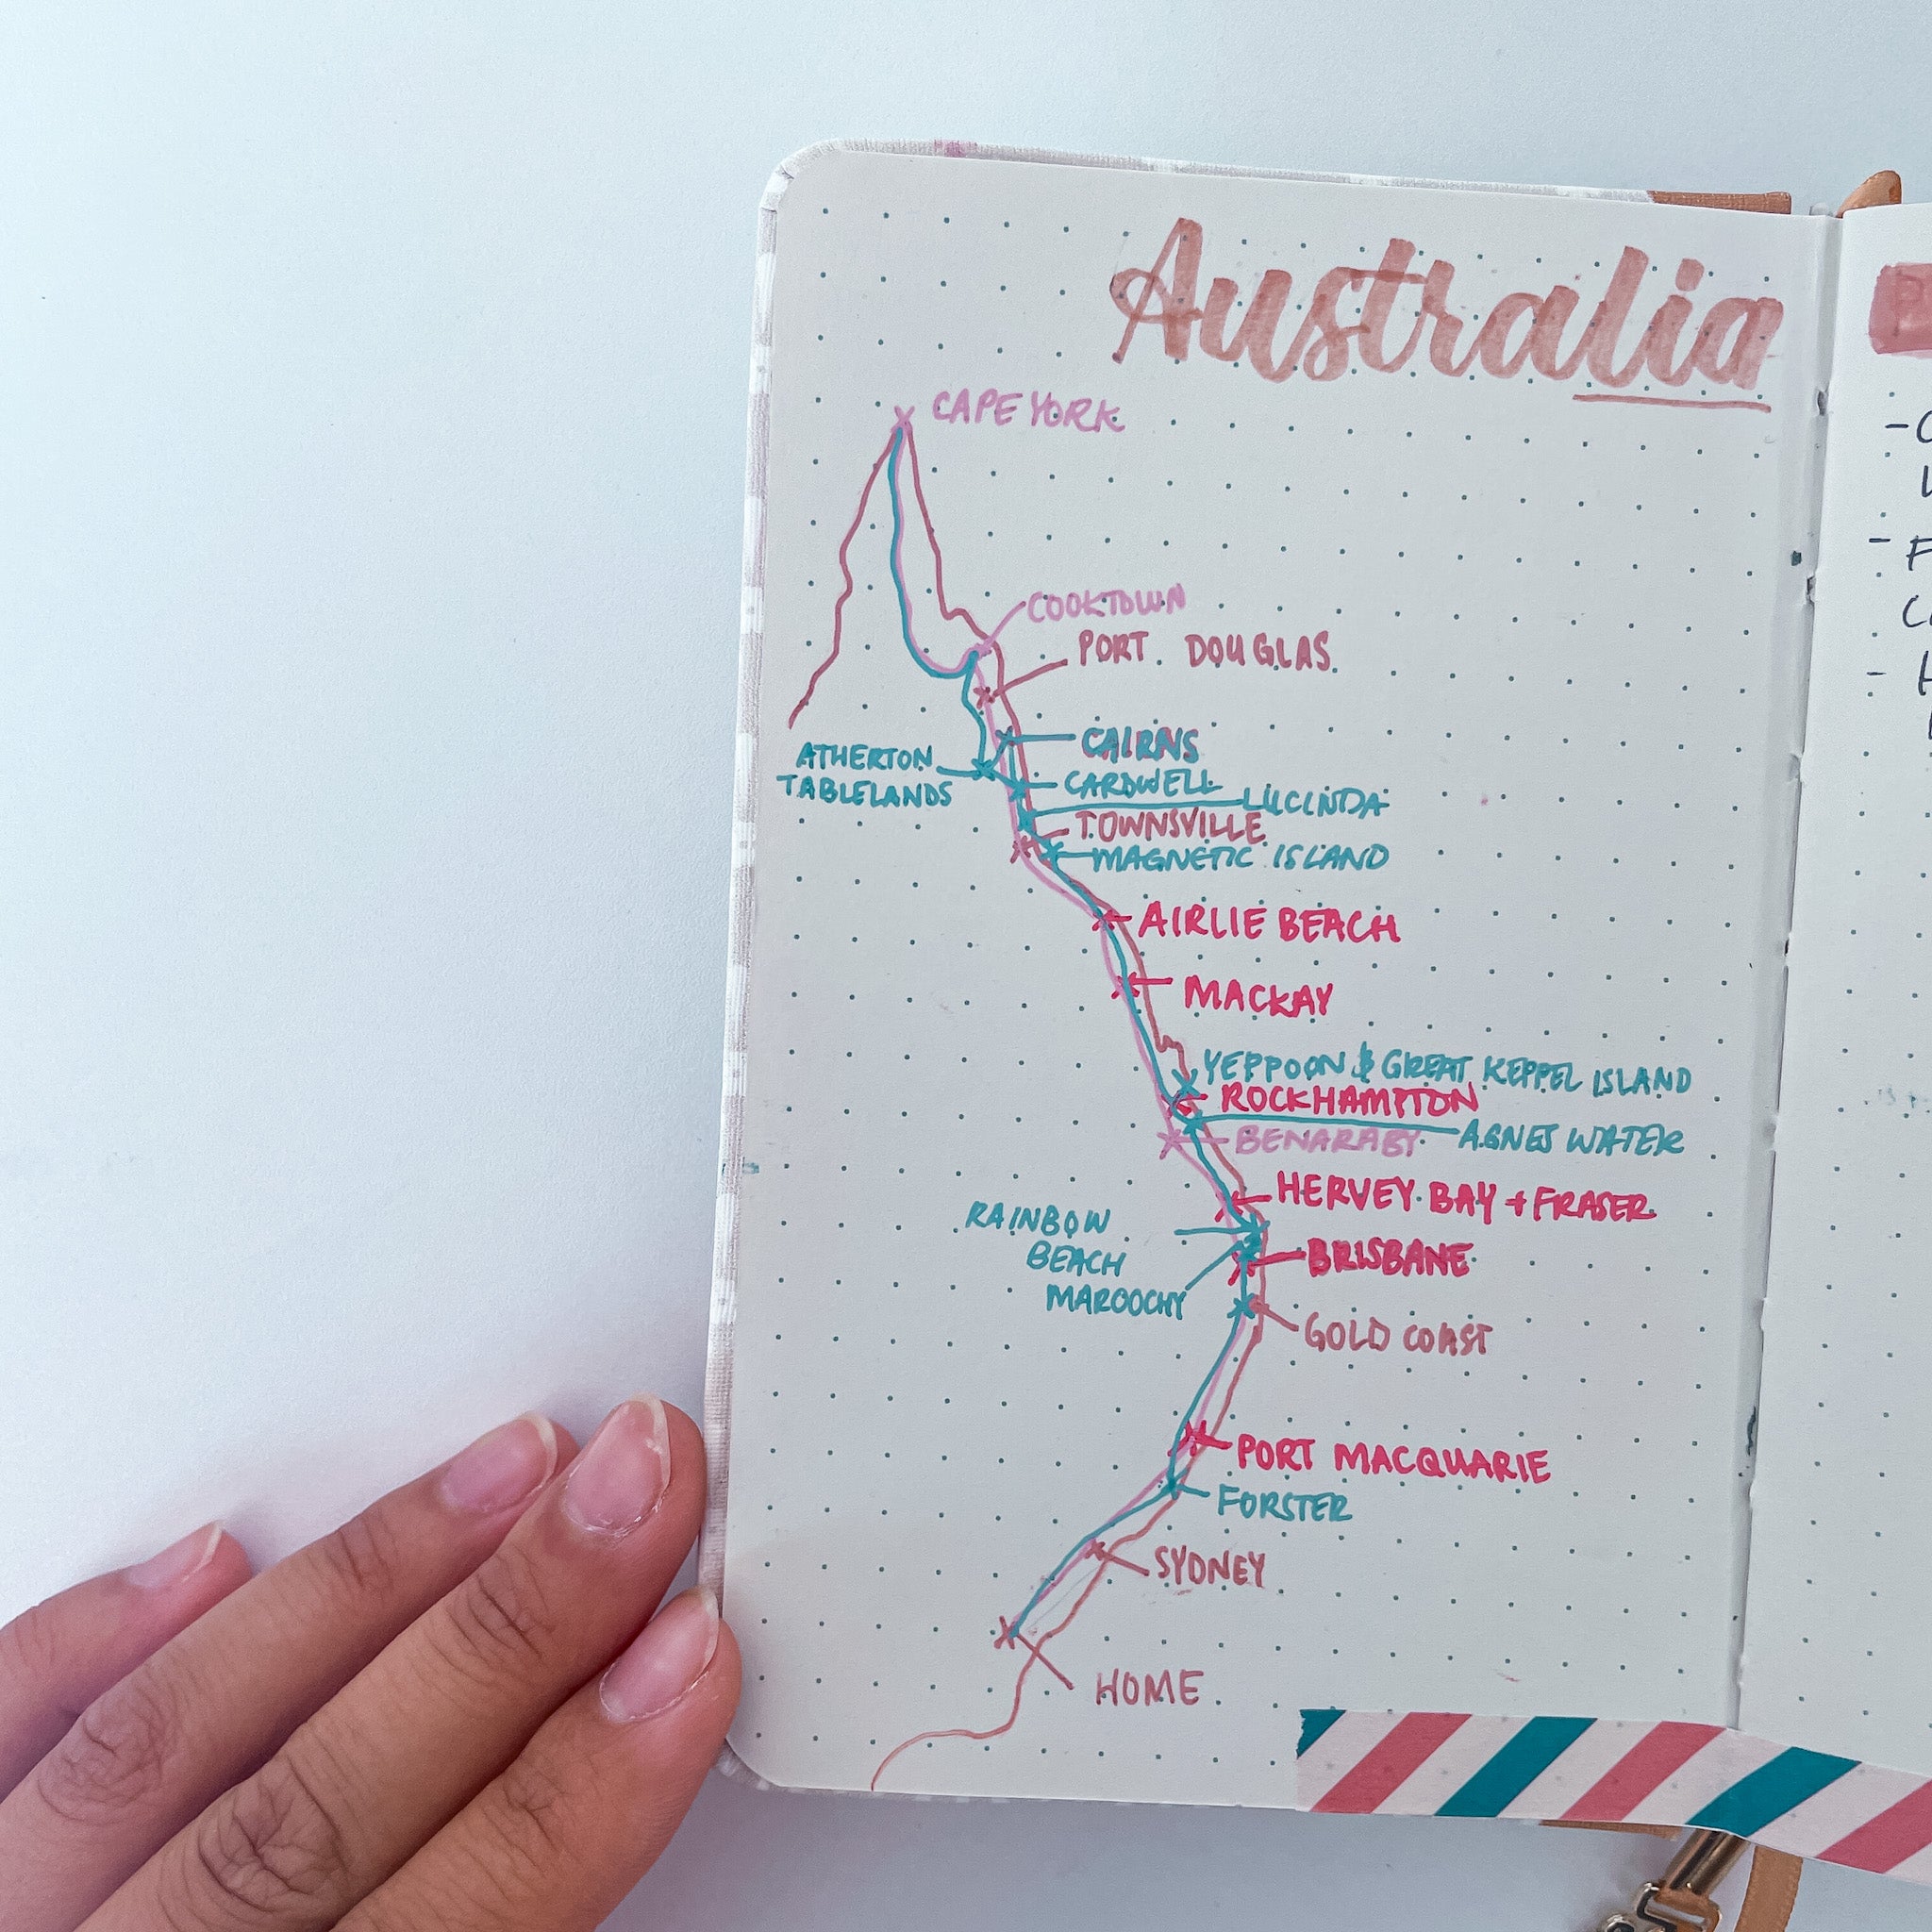 Travel Journal Australia